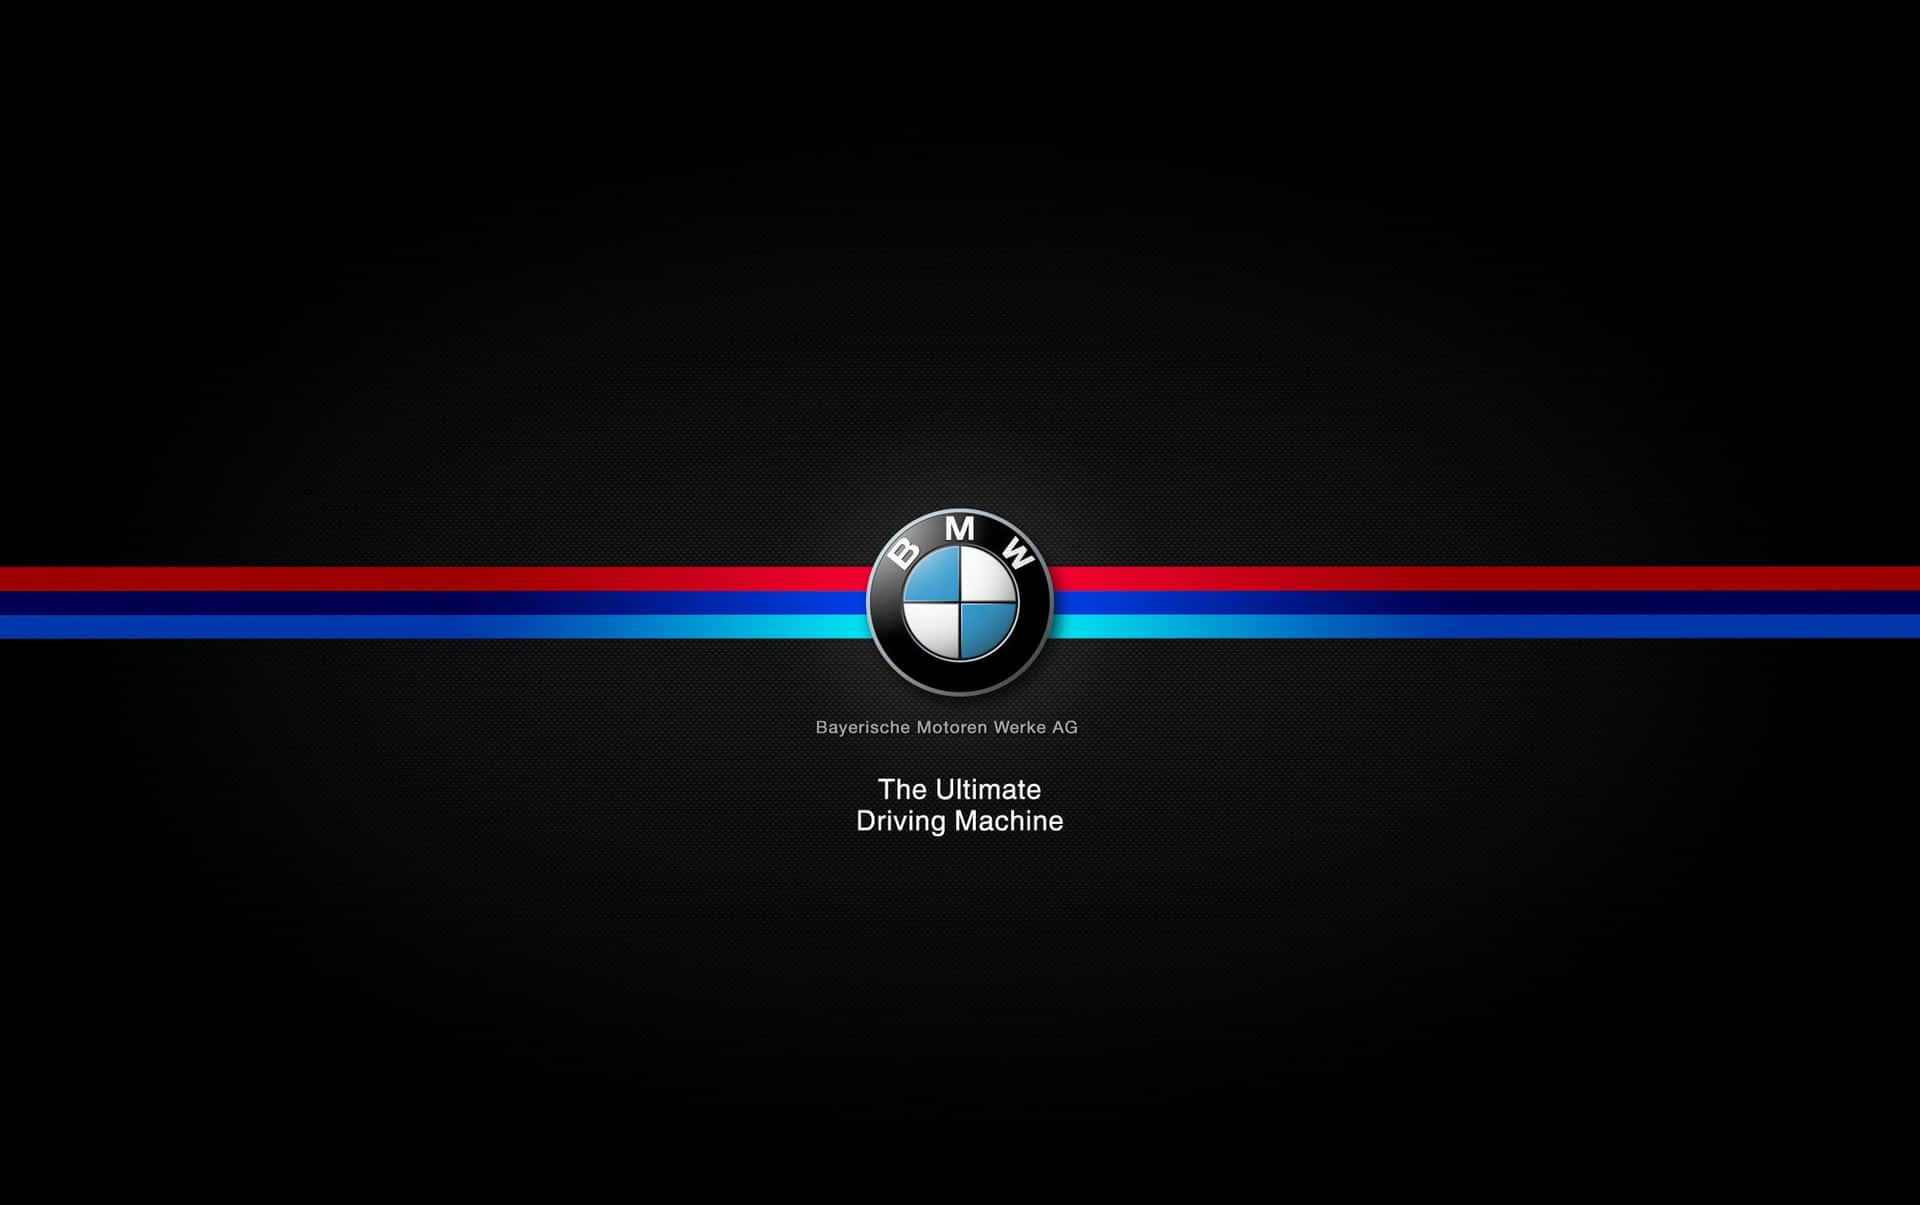 720pm-seriens Bakgrundsbild Med Bmw-logotypen - Den Ultimata Körmaskinen